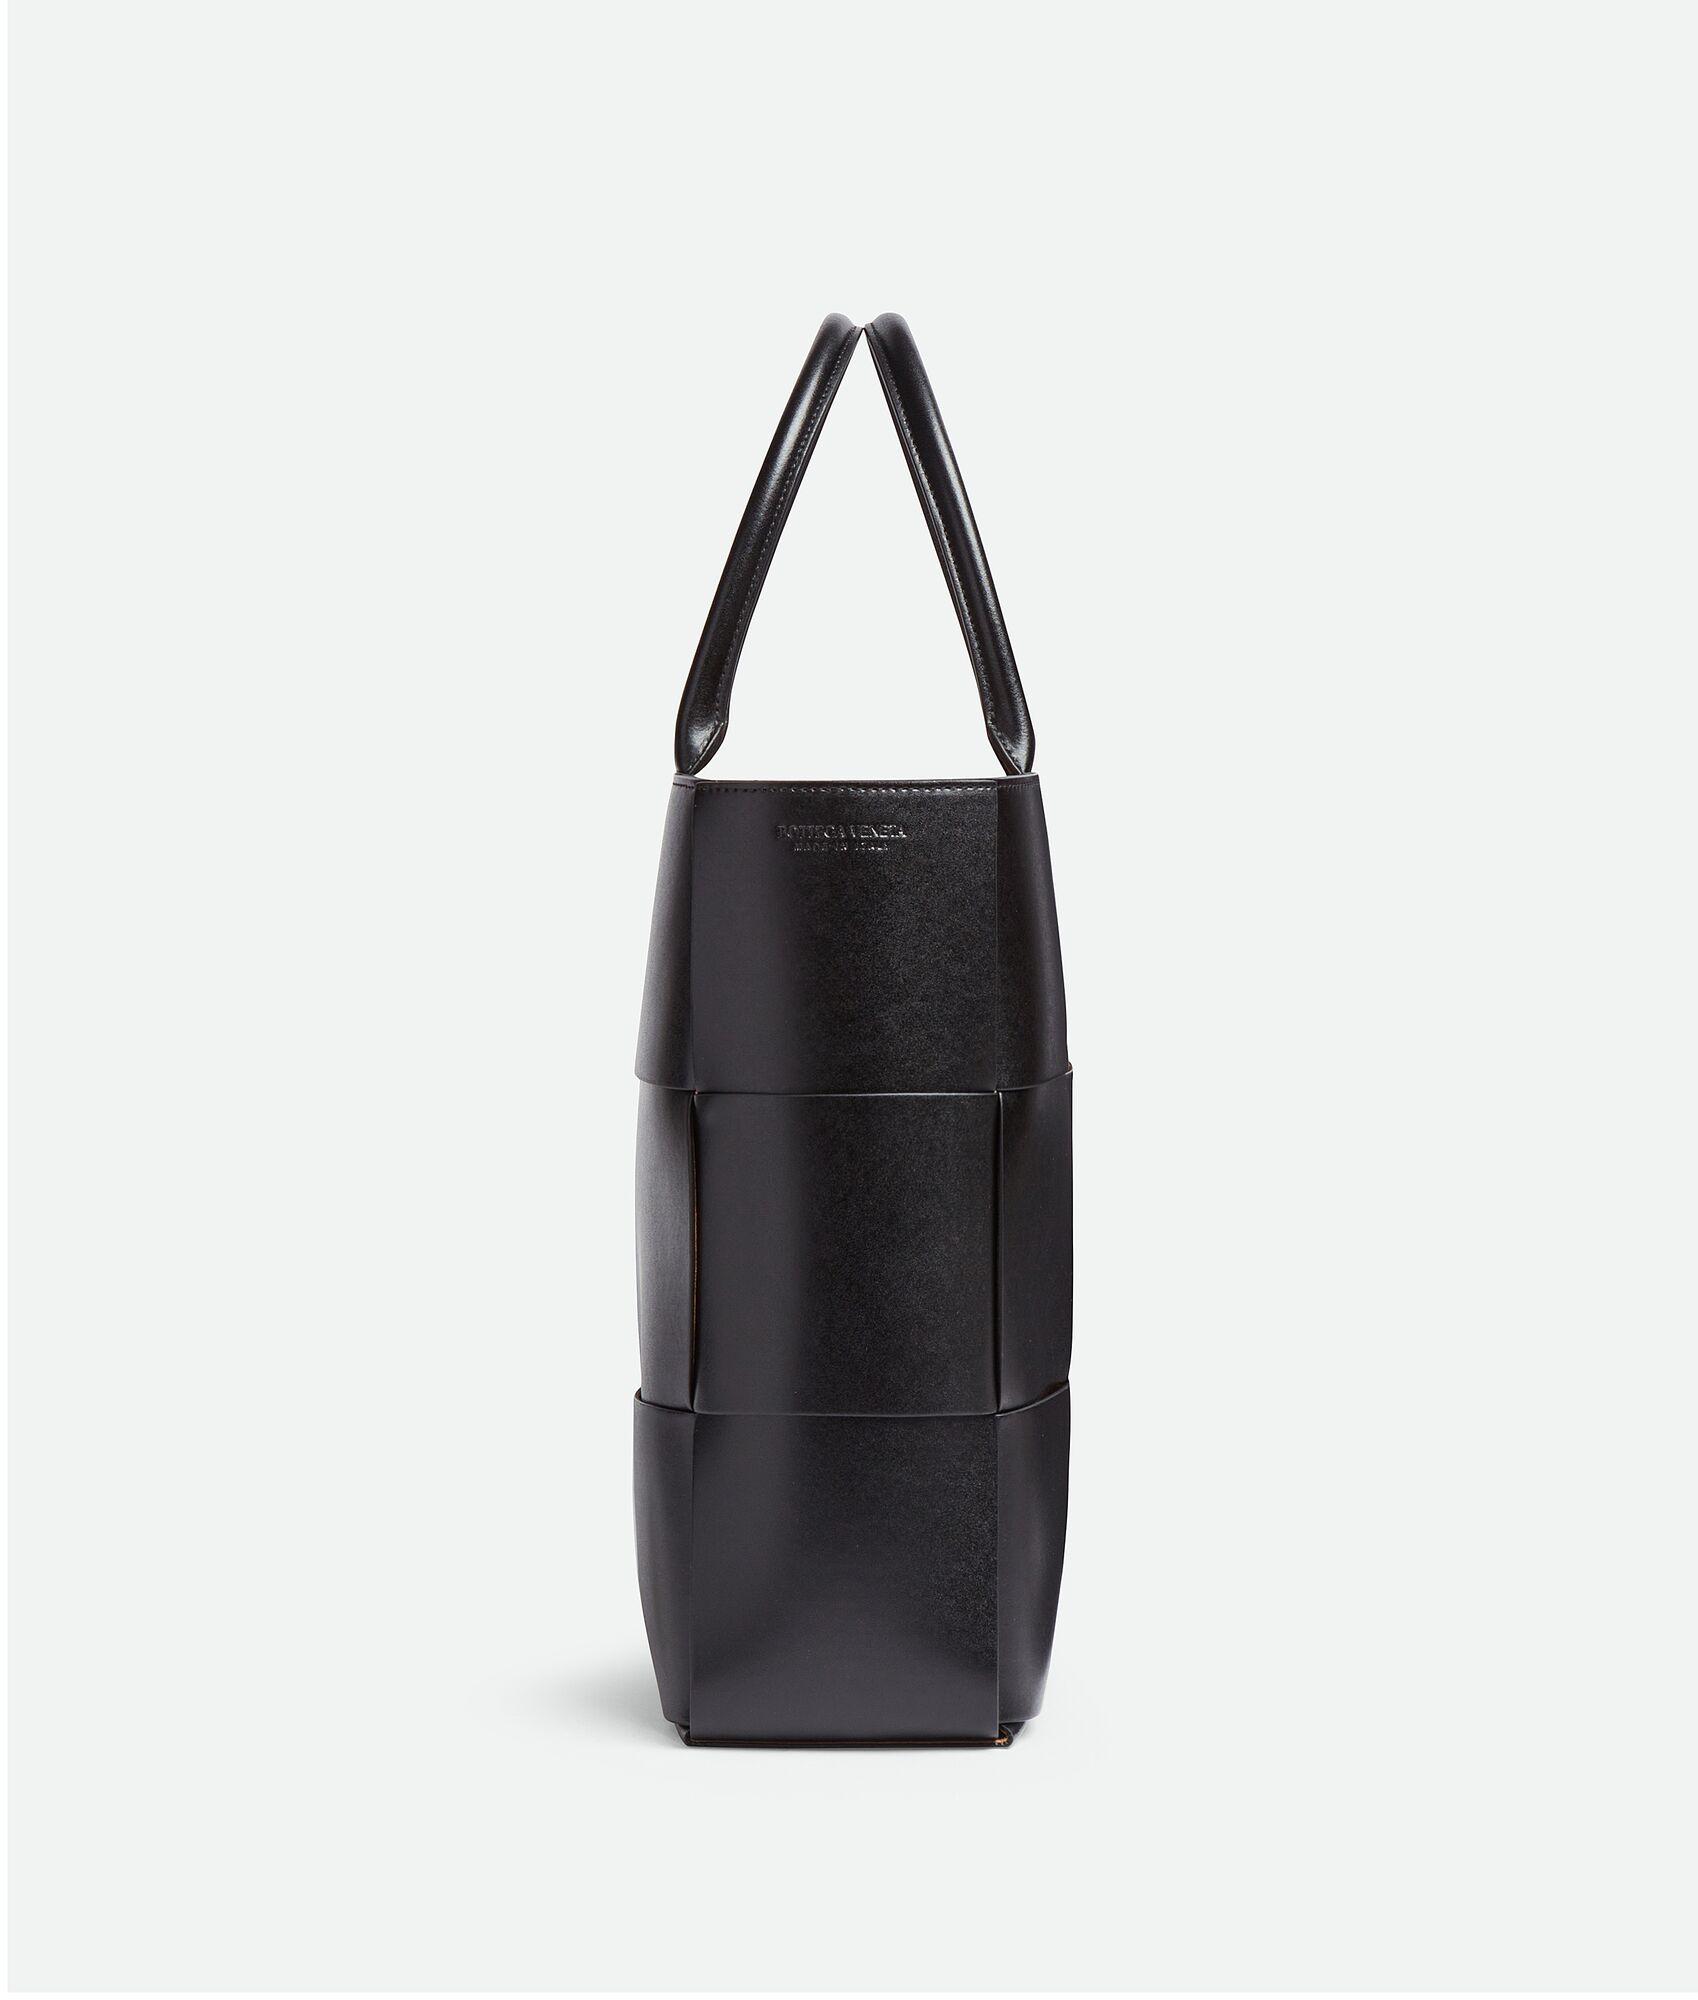 Bottega Veneta® Large Arco Tote Bag in Nero. Shop online now.